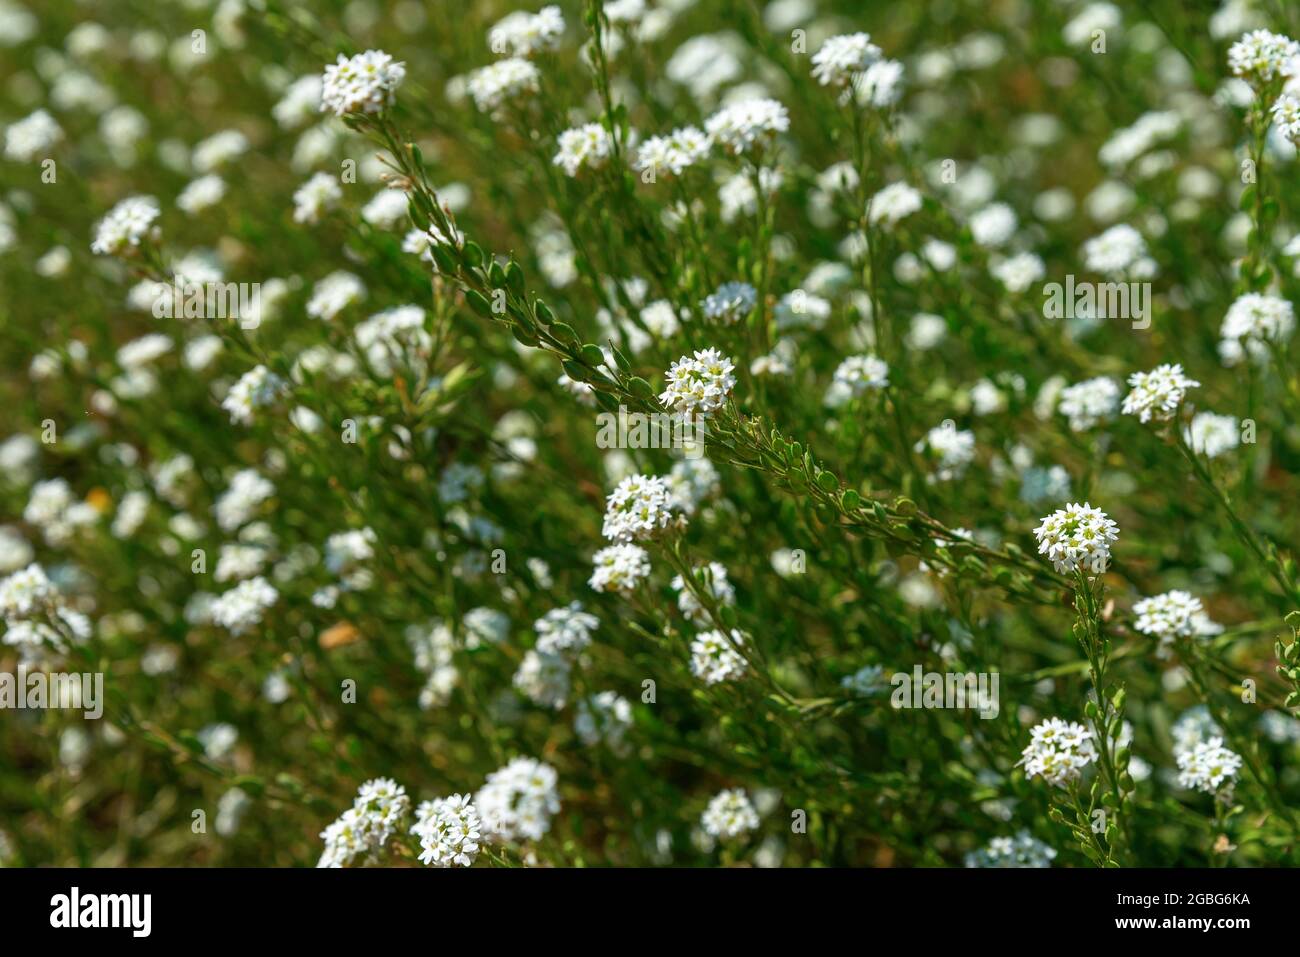 Berteroa incana, hoary alyssum. Blühende weiße Blüten berteroa incana auf  der Wiese. Blühende Pflanzen in freier Wildbahn. Schöner Sommer oder  Herbst-Backgro Stockfotografie - Alamy